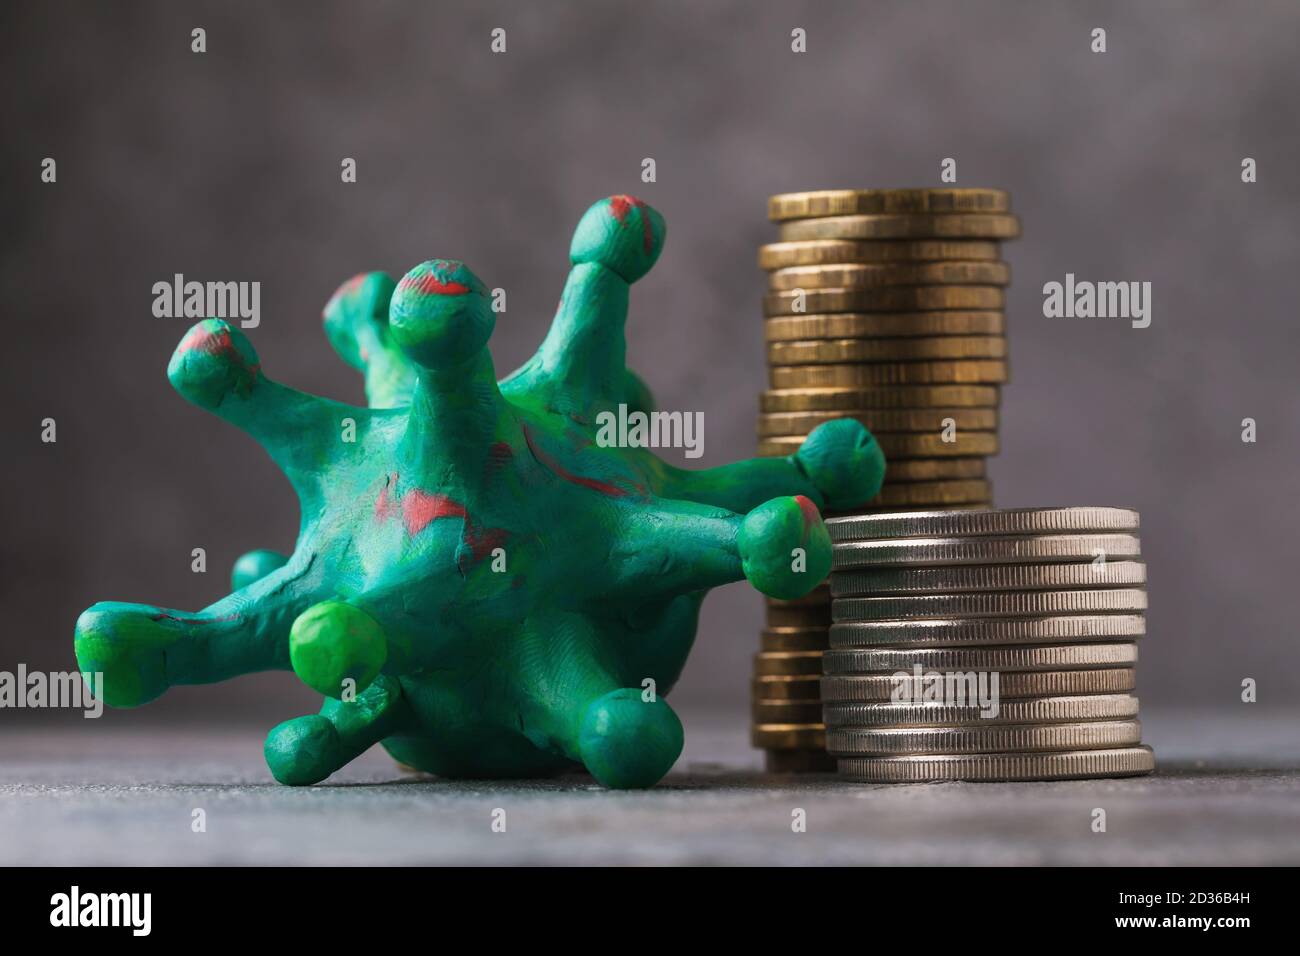 Toy coronavirus and various coins. Concept on the impact of coronavirus on business around the world Stock Photo